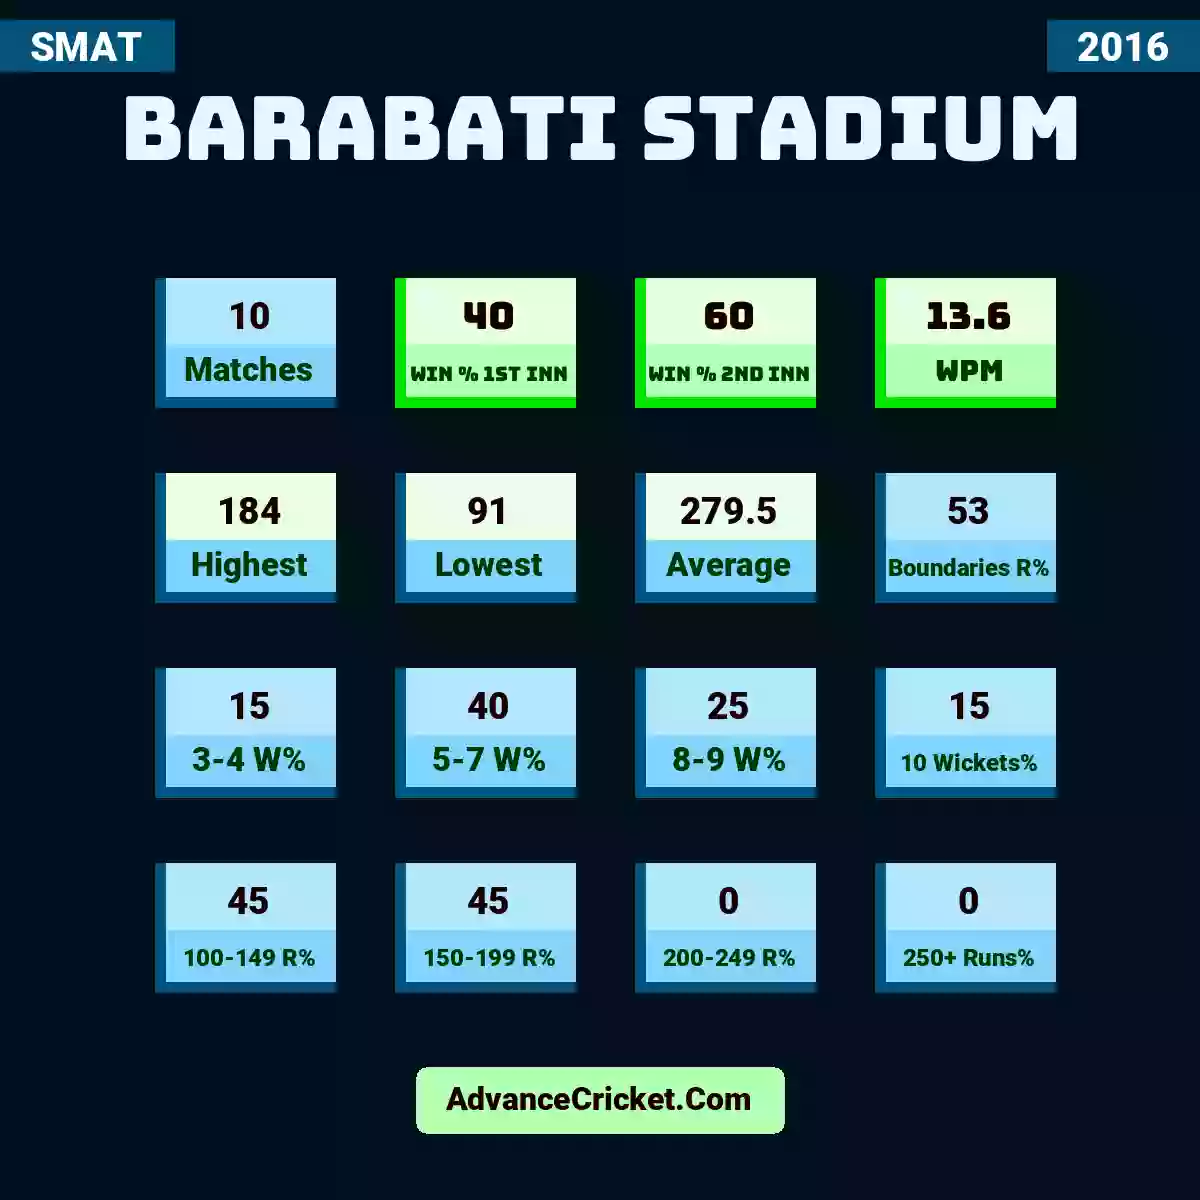 Image showing Barabati Stadium with Matches: 10, Win % 1st Inn: 40, Win % 2nd Inn: 60, WPM: 13.6, Highest: 184, Lowest: 91, Average: 279.5, Boundaries R%: 53, 3-4 W%: 15, 5-7 W%: 40, 8-9 W%: 25, 10 Wickets%: 15, 100-149 R%: 45, 150-199 R%: 45, 200-249 R%: 0, 250+ Runs%: 0.